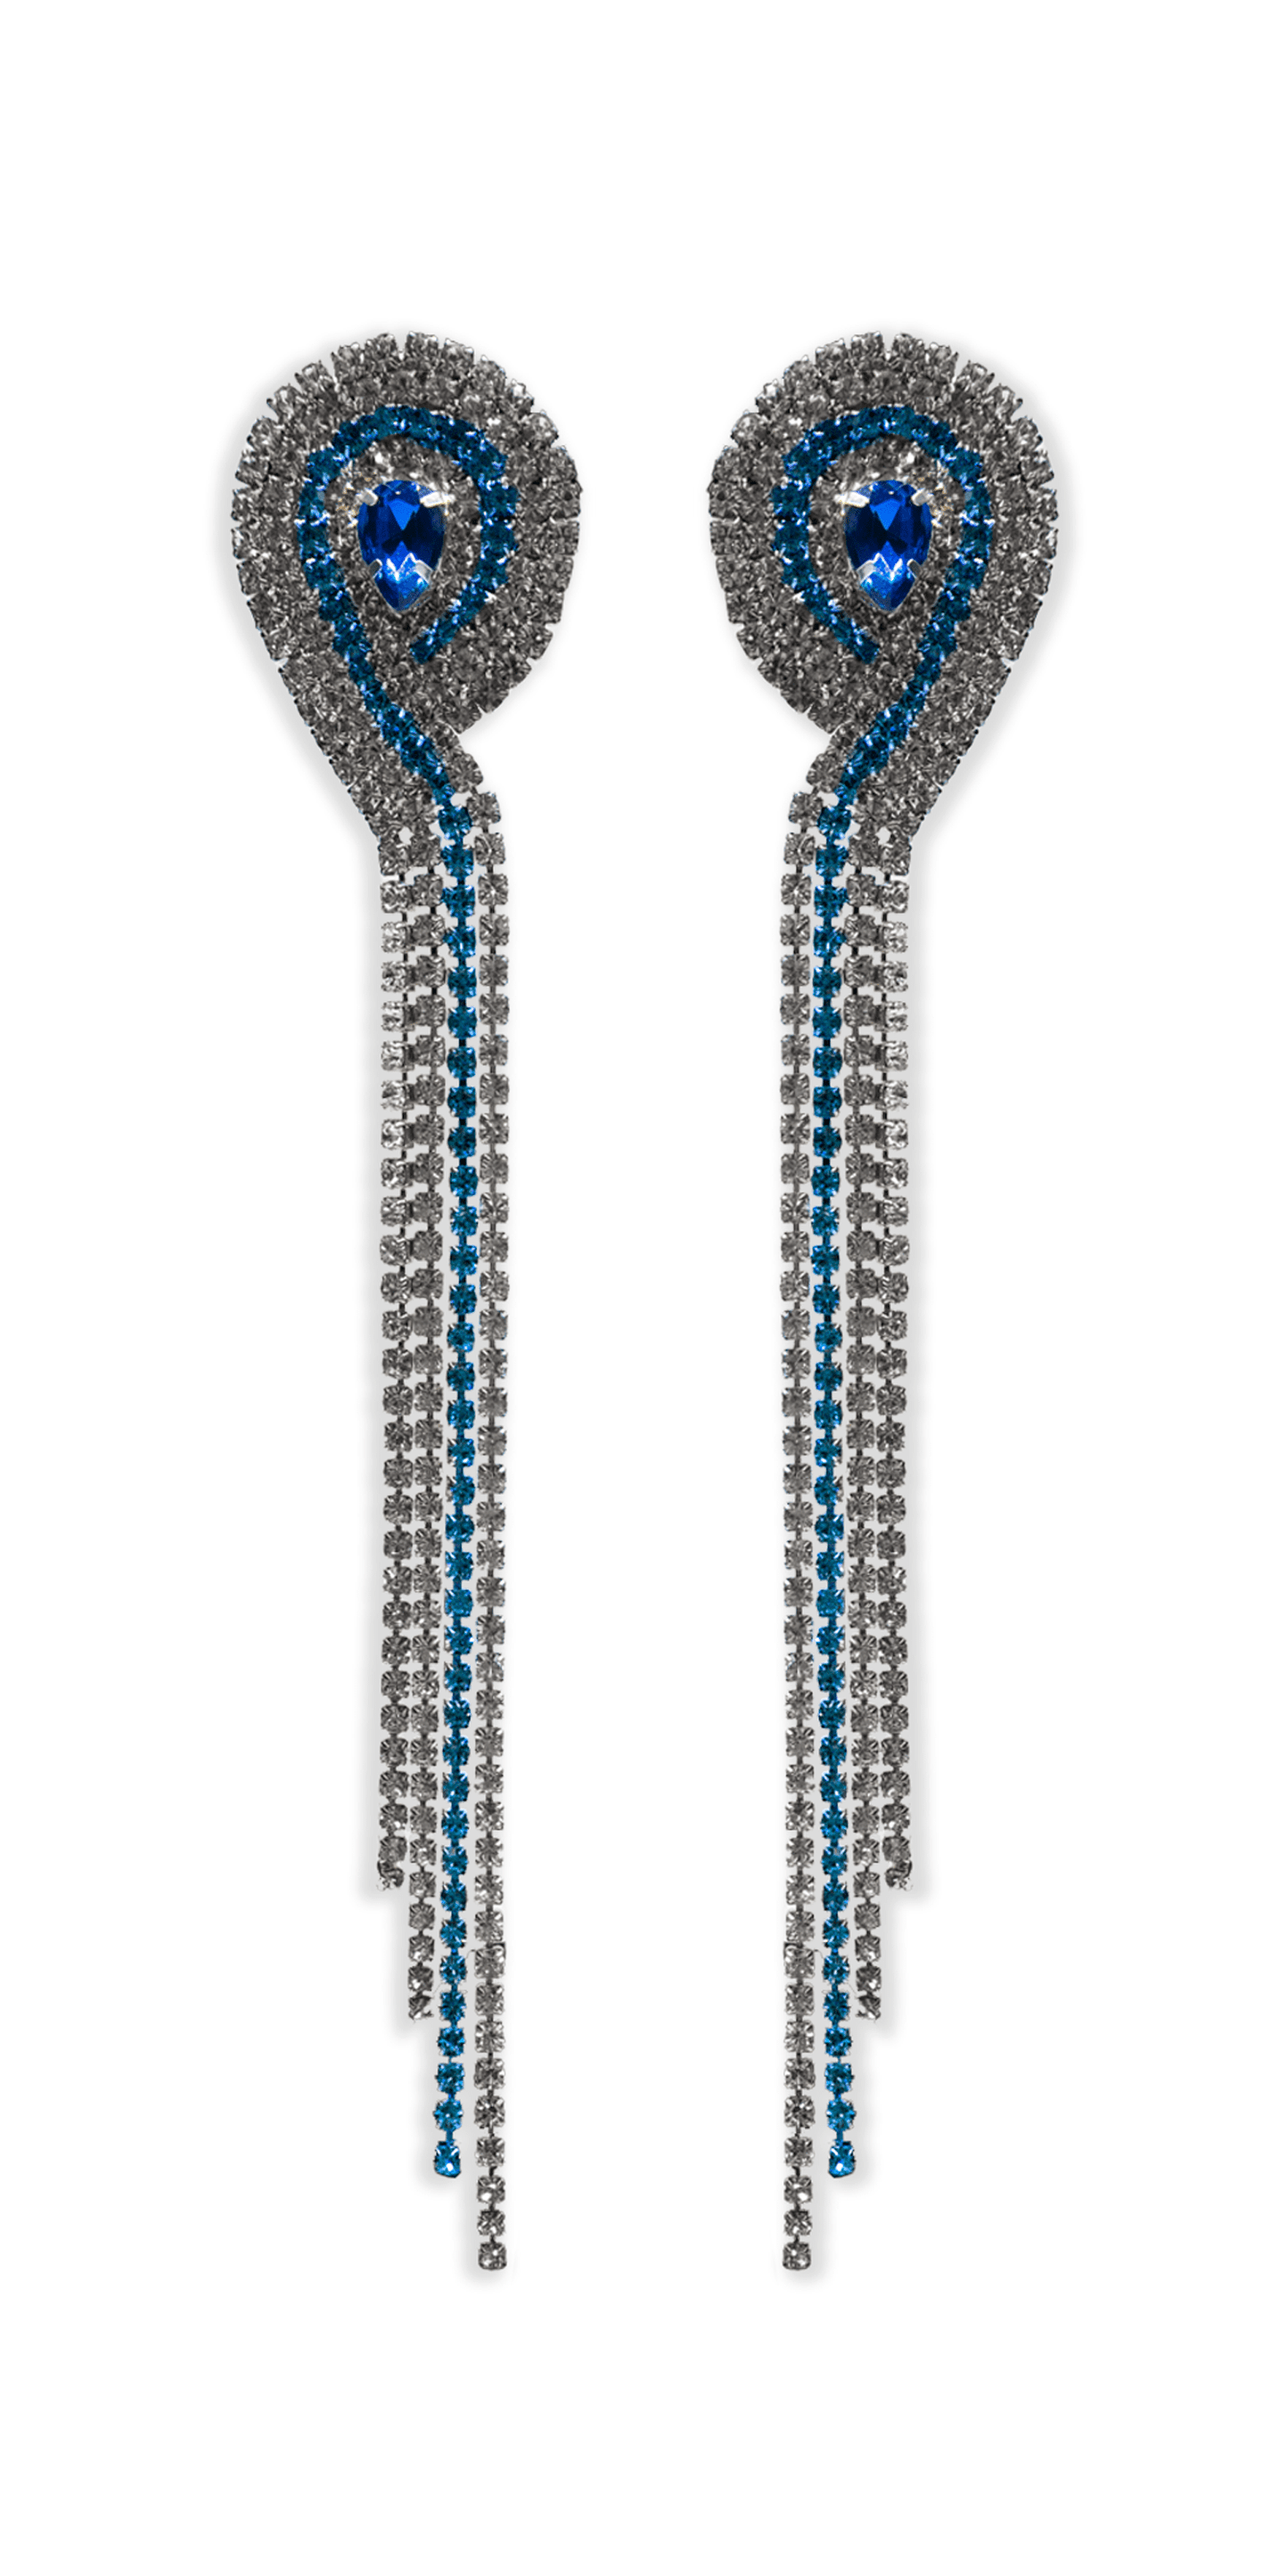 Camille La Vie 4 Strand Rhinestone Dangle Earrings OS / blue